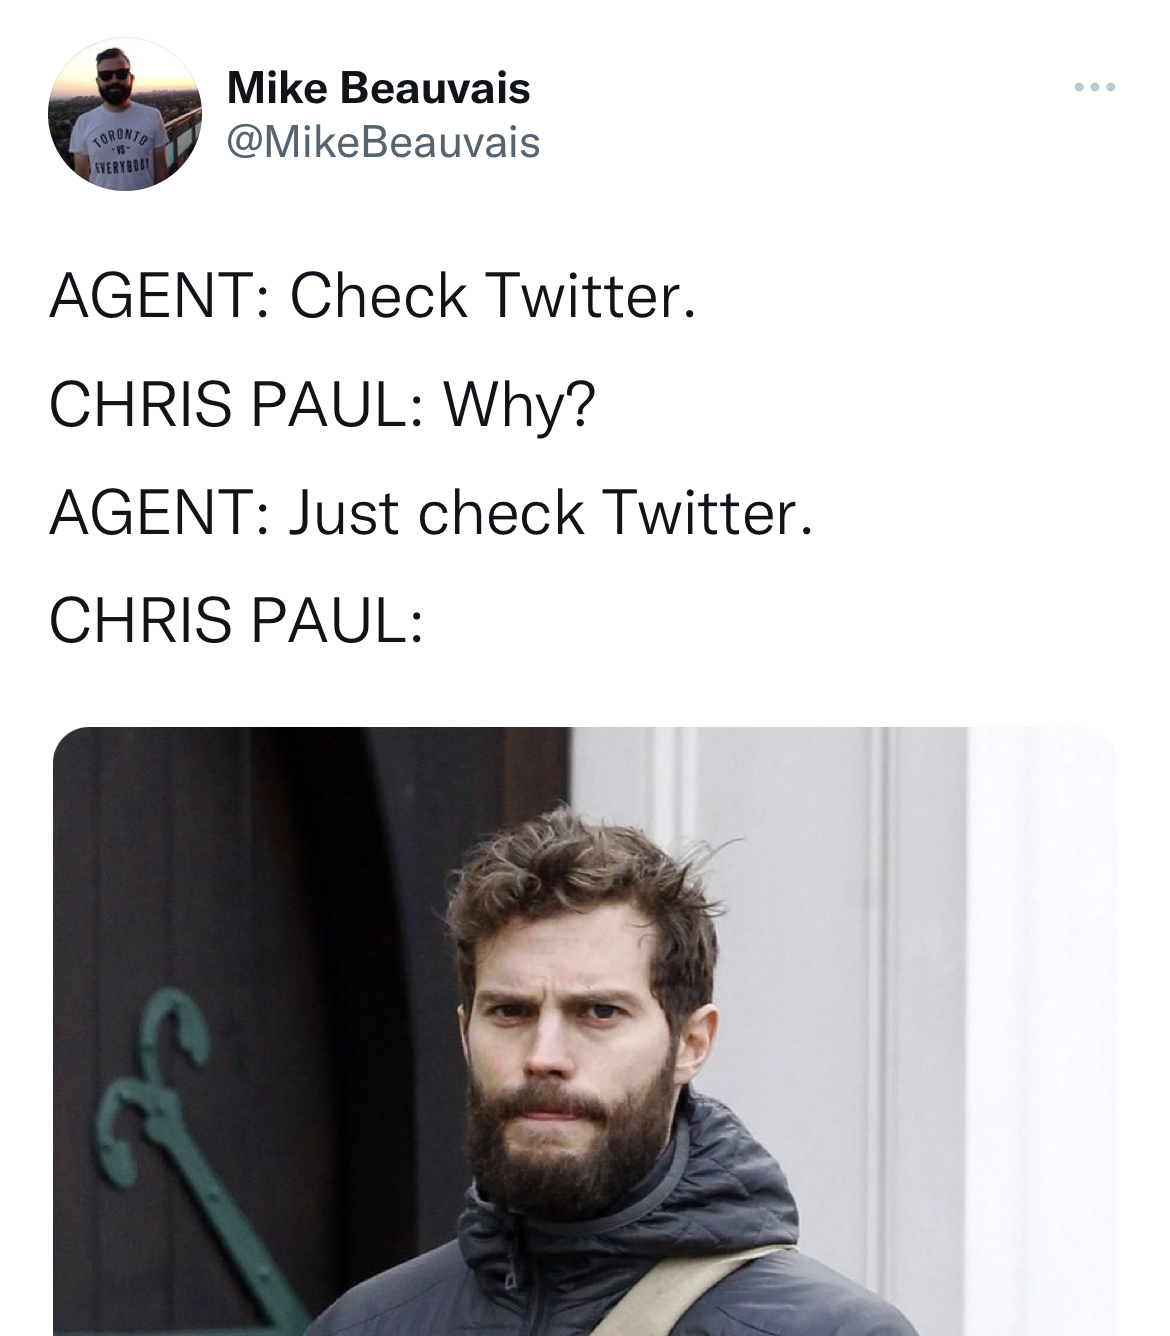 Chris Paul and Kim K memes - human behavior - Mike Beauvais Agent Check Twitter. Chris Paul Why? Agent Just check Twitter. Chris Paul 4